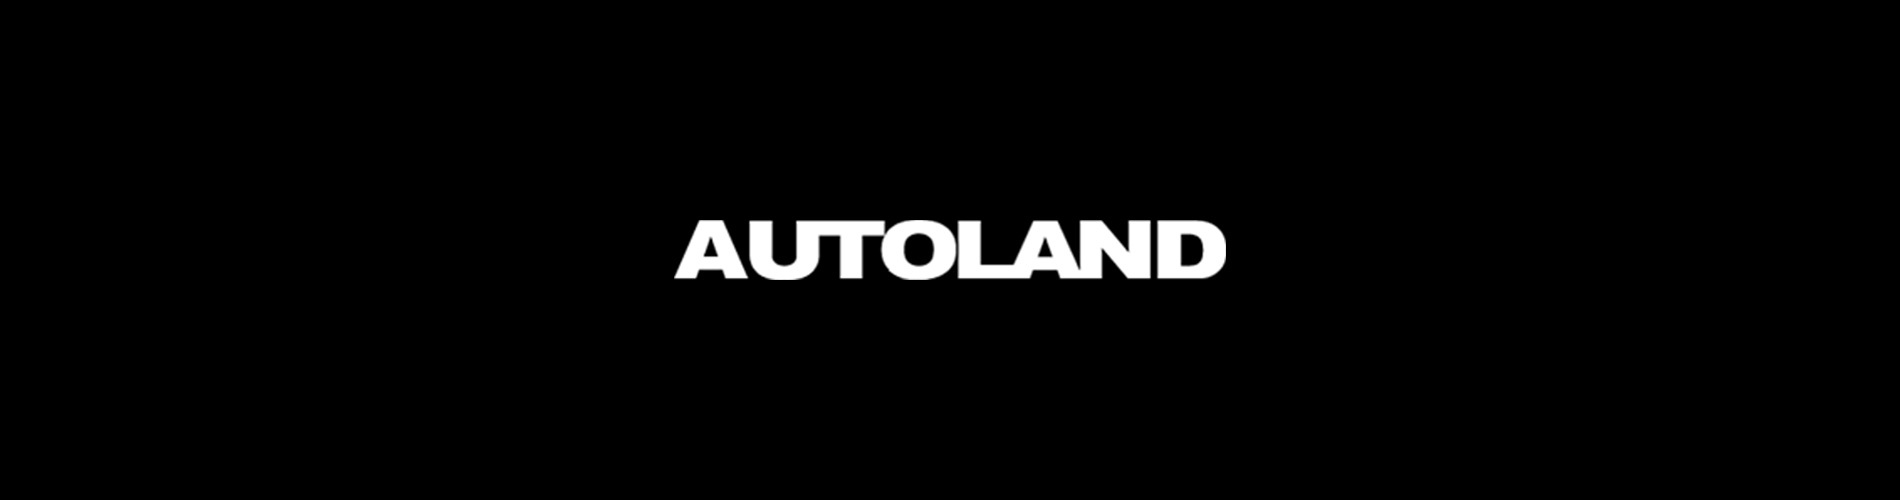 banner-autoland-home